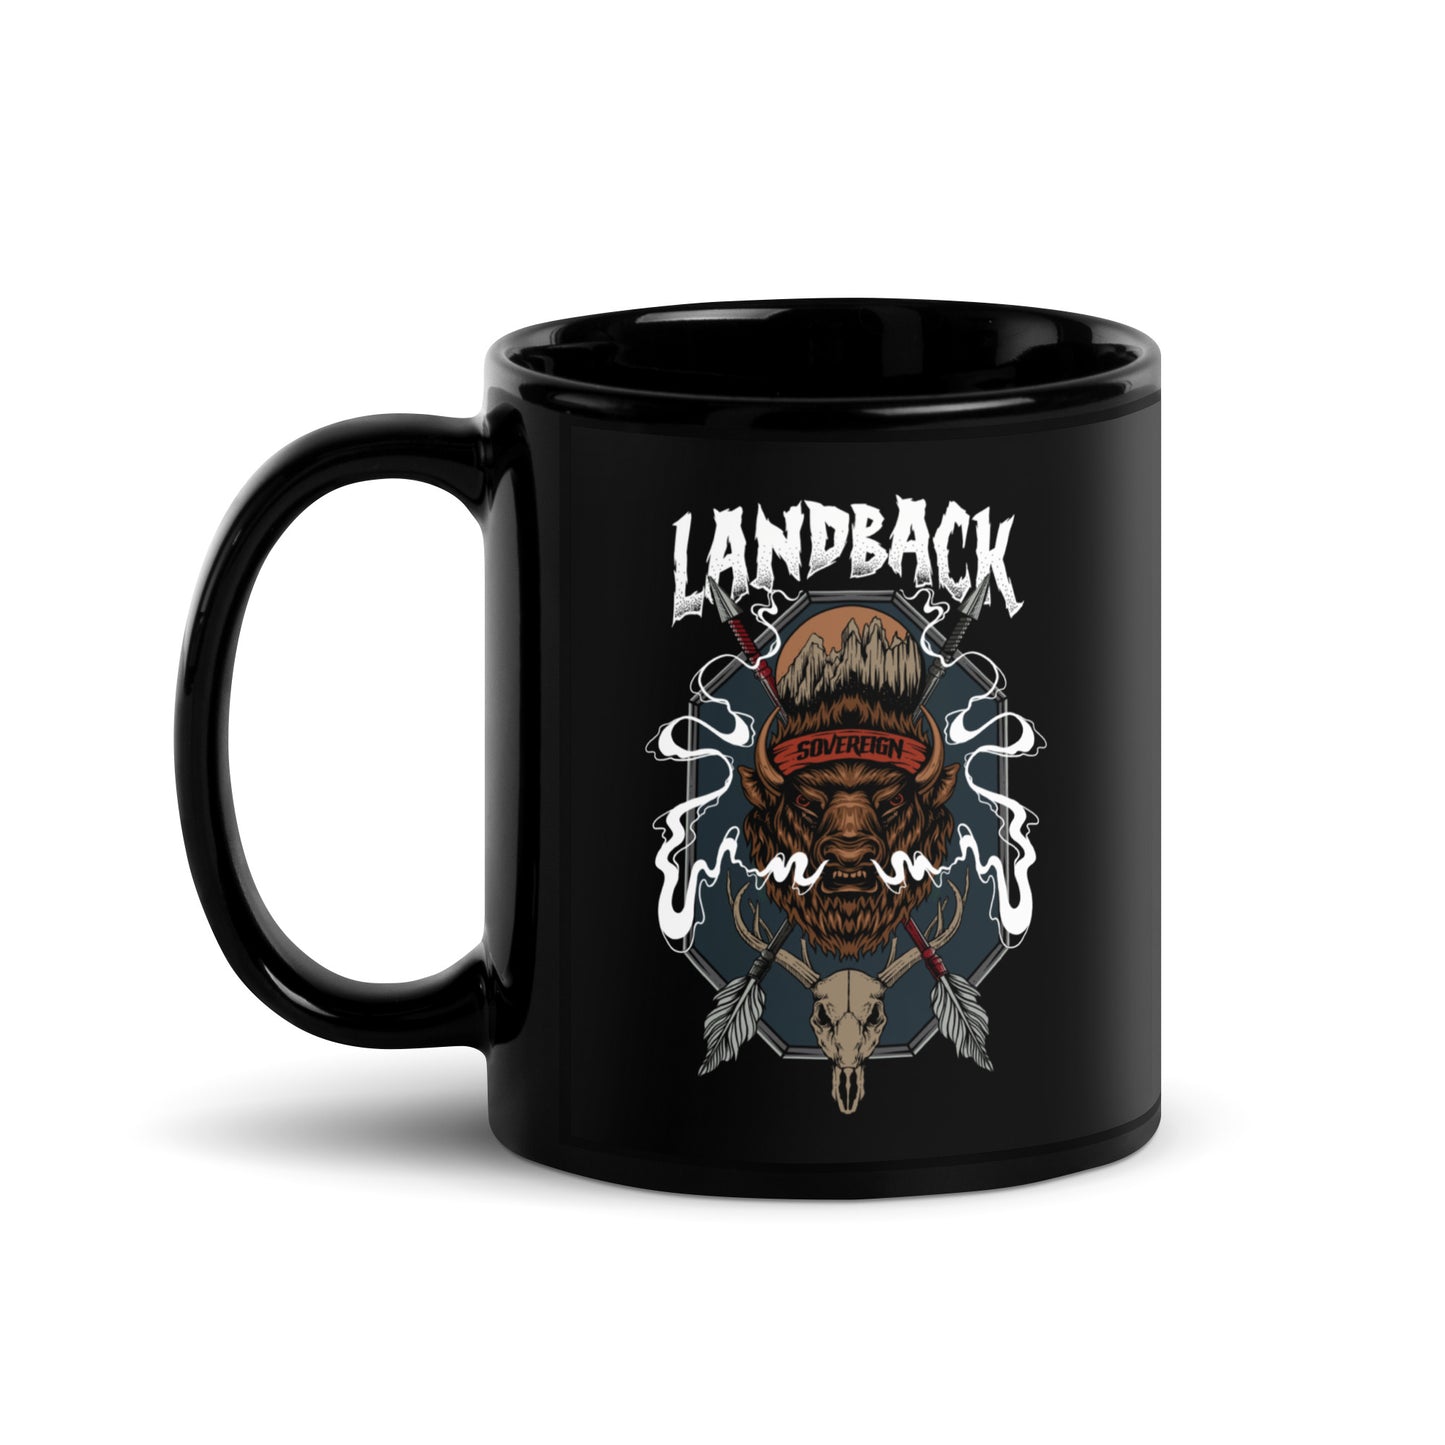 The LANDBACK Mug